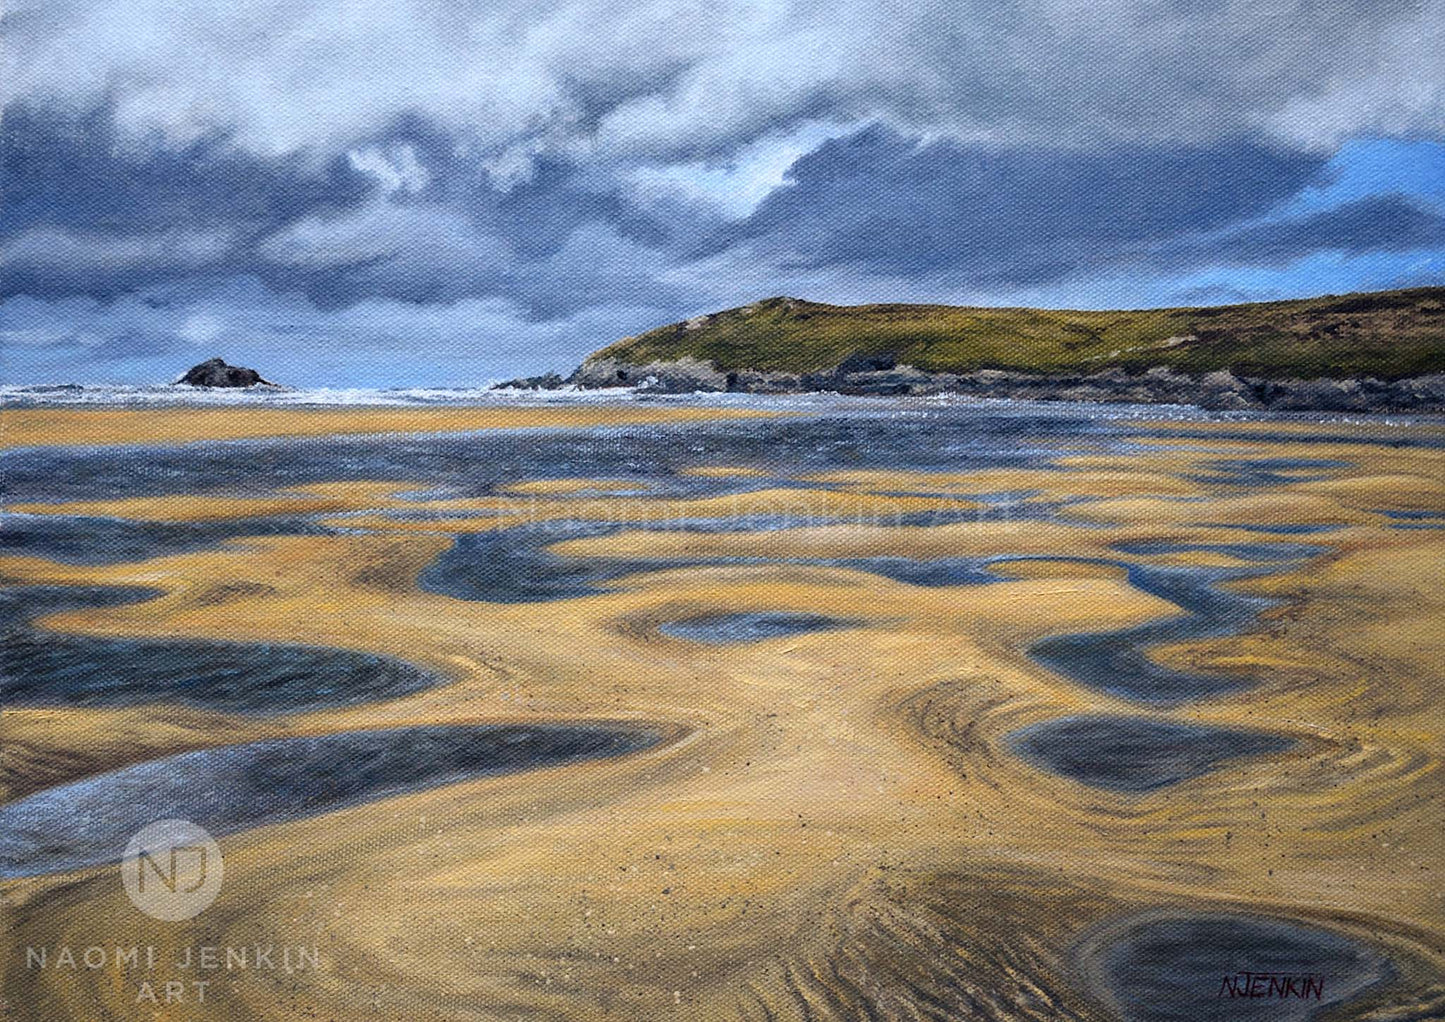 Close up fine art seascape print 'Low Tide At Crantock' by artist Naomi Jenkin